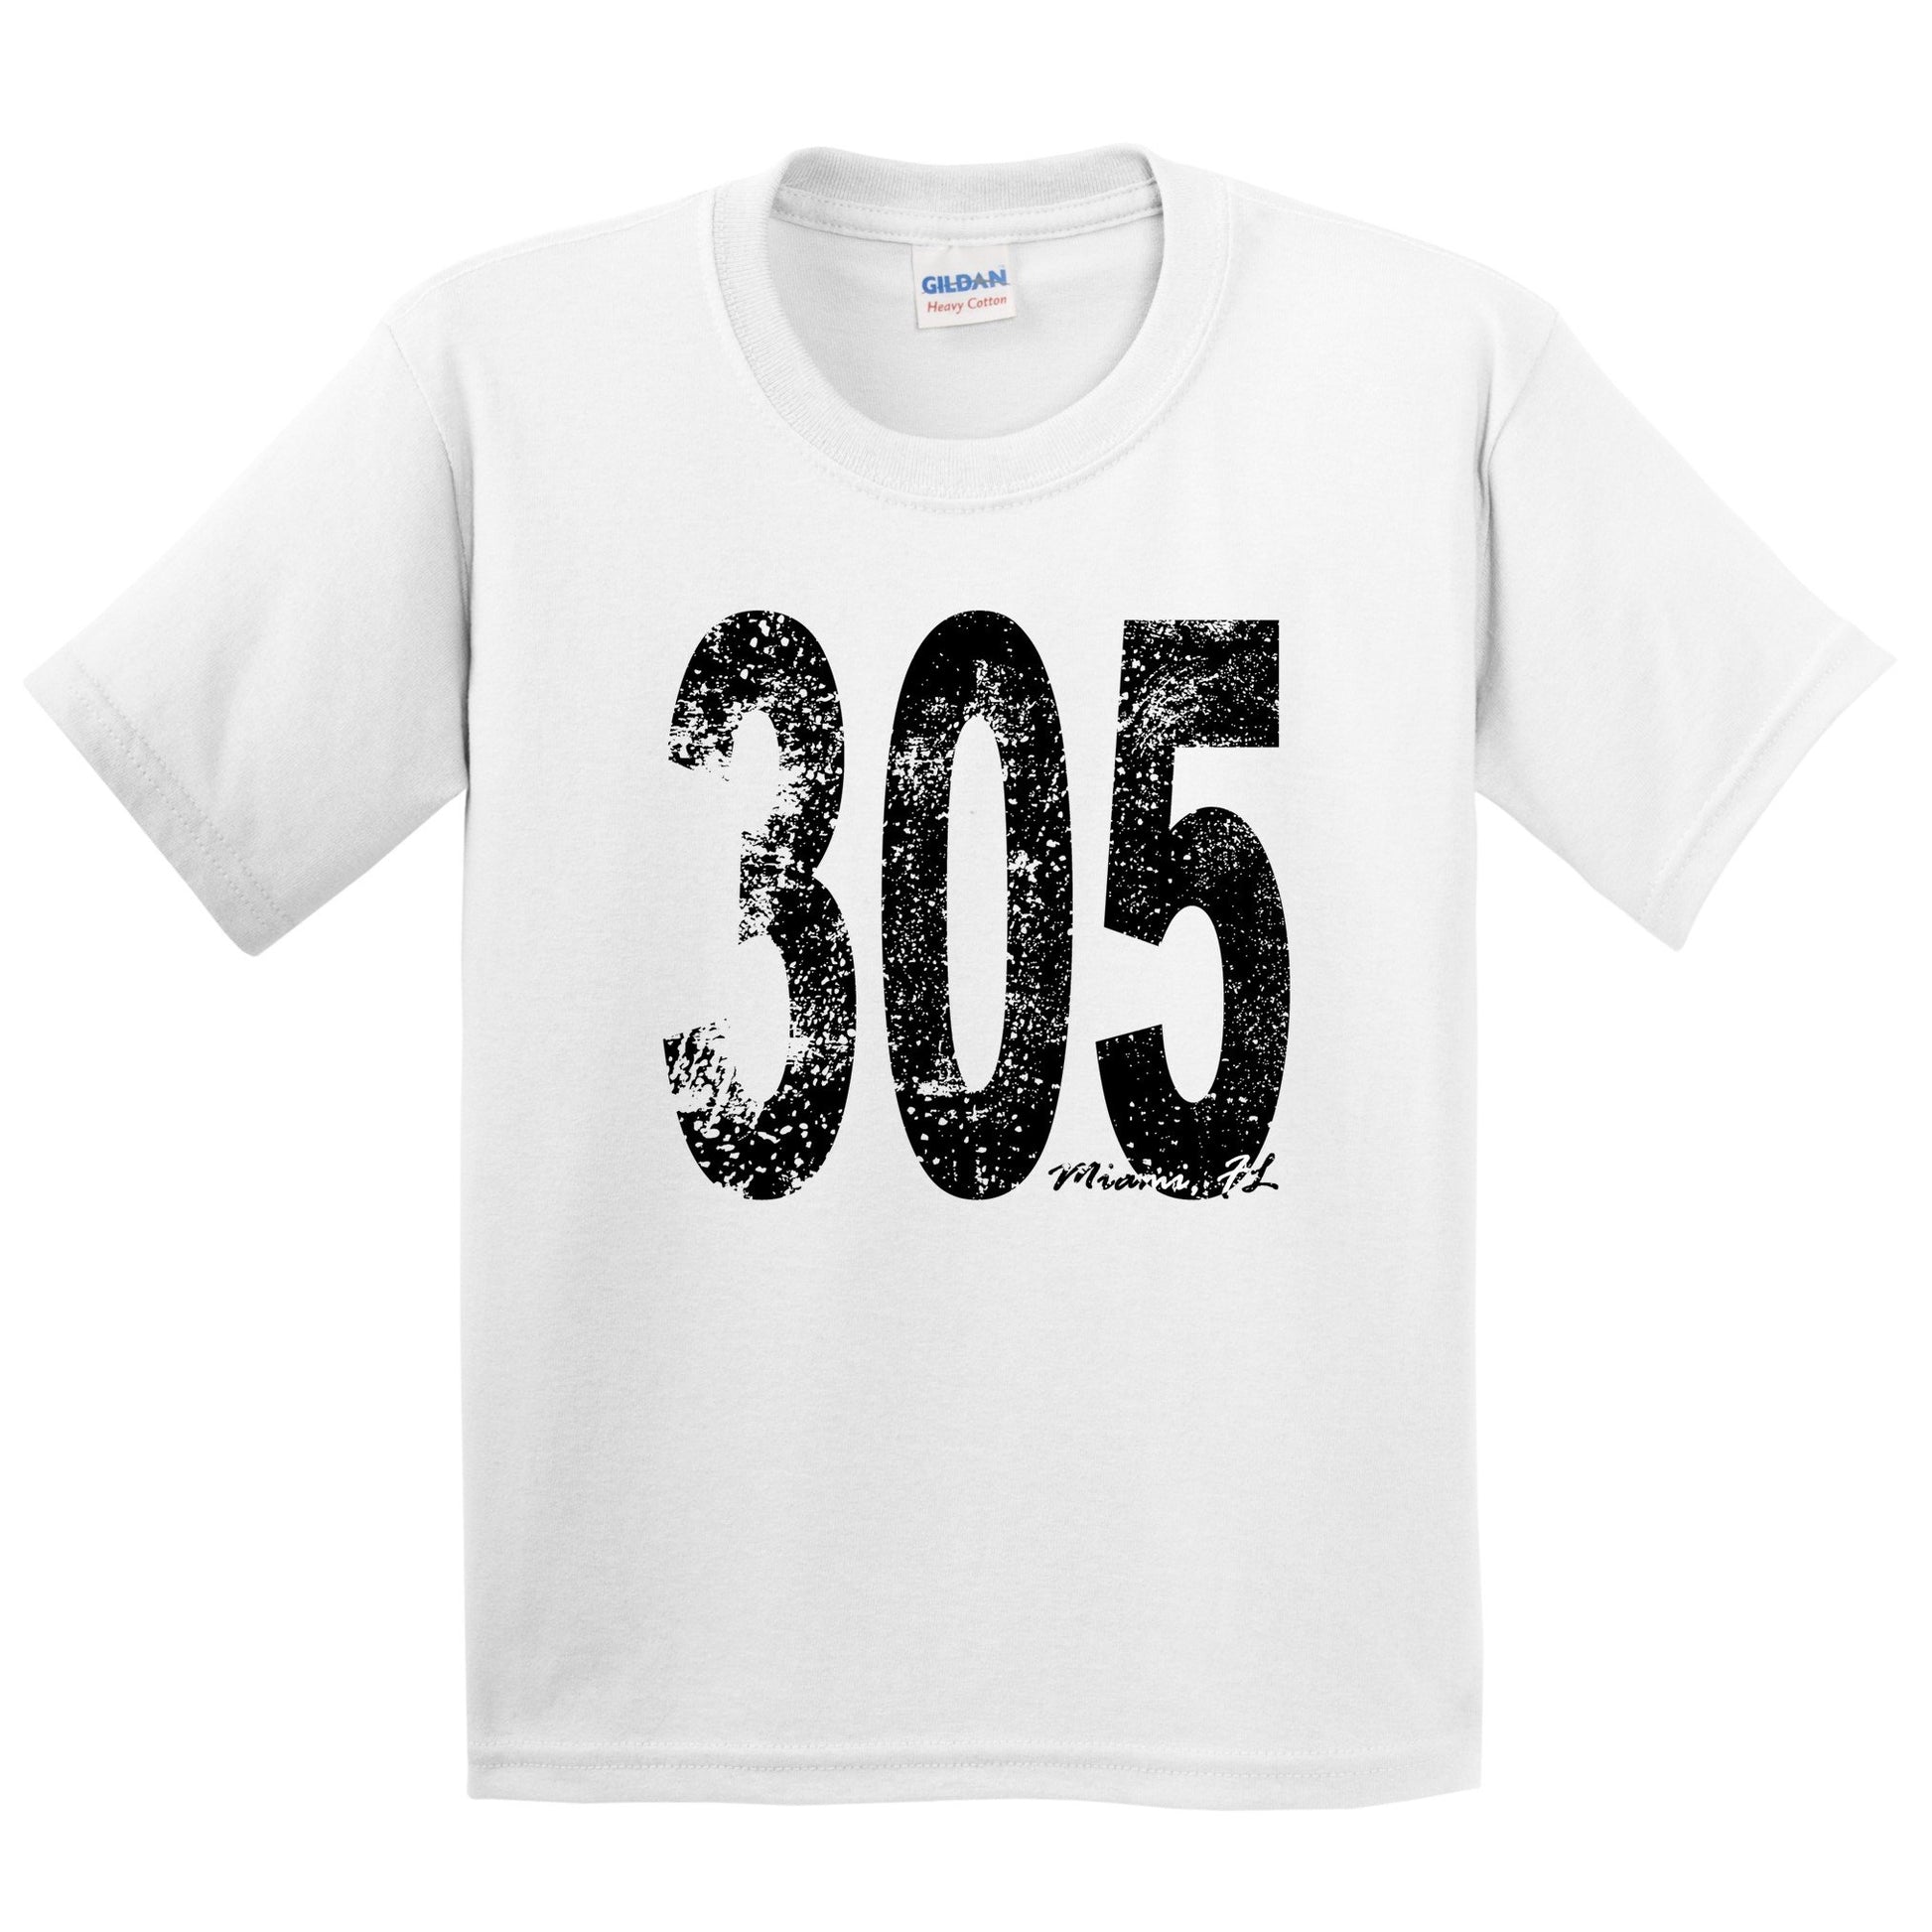 305 Miami Florida Area Code Kids Youth T-Shirt